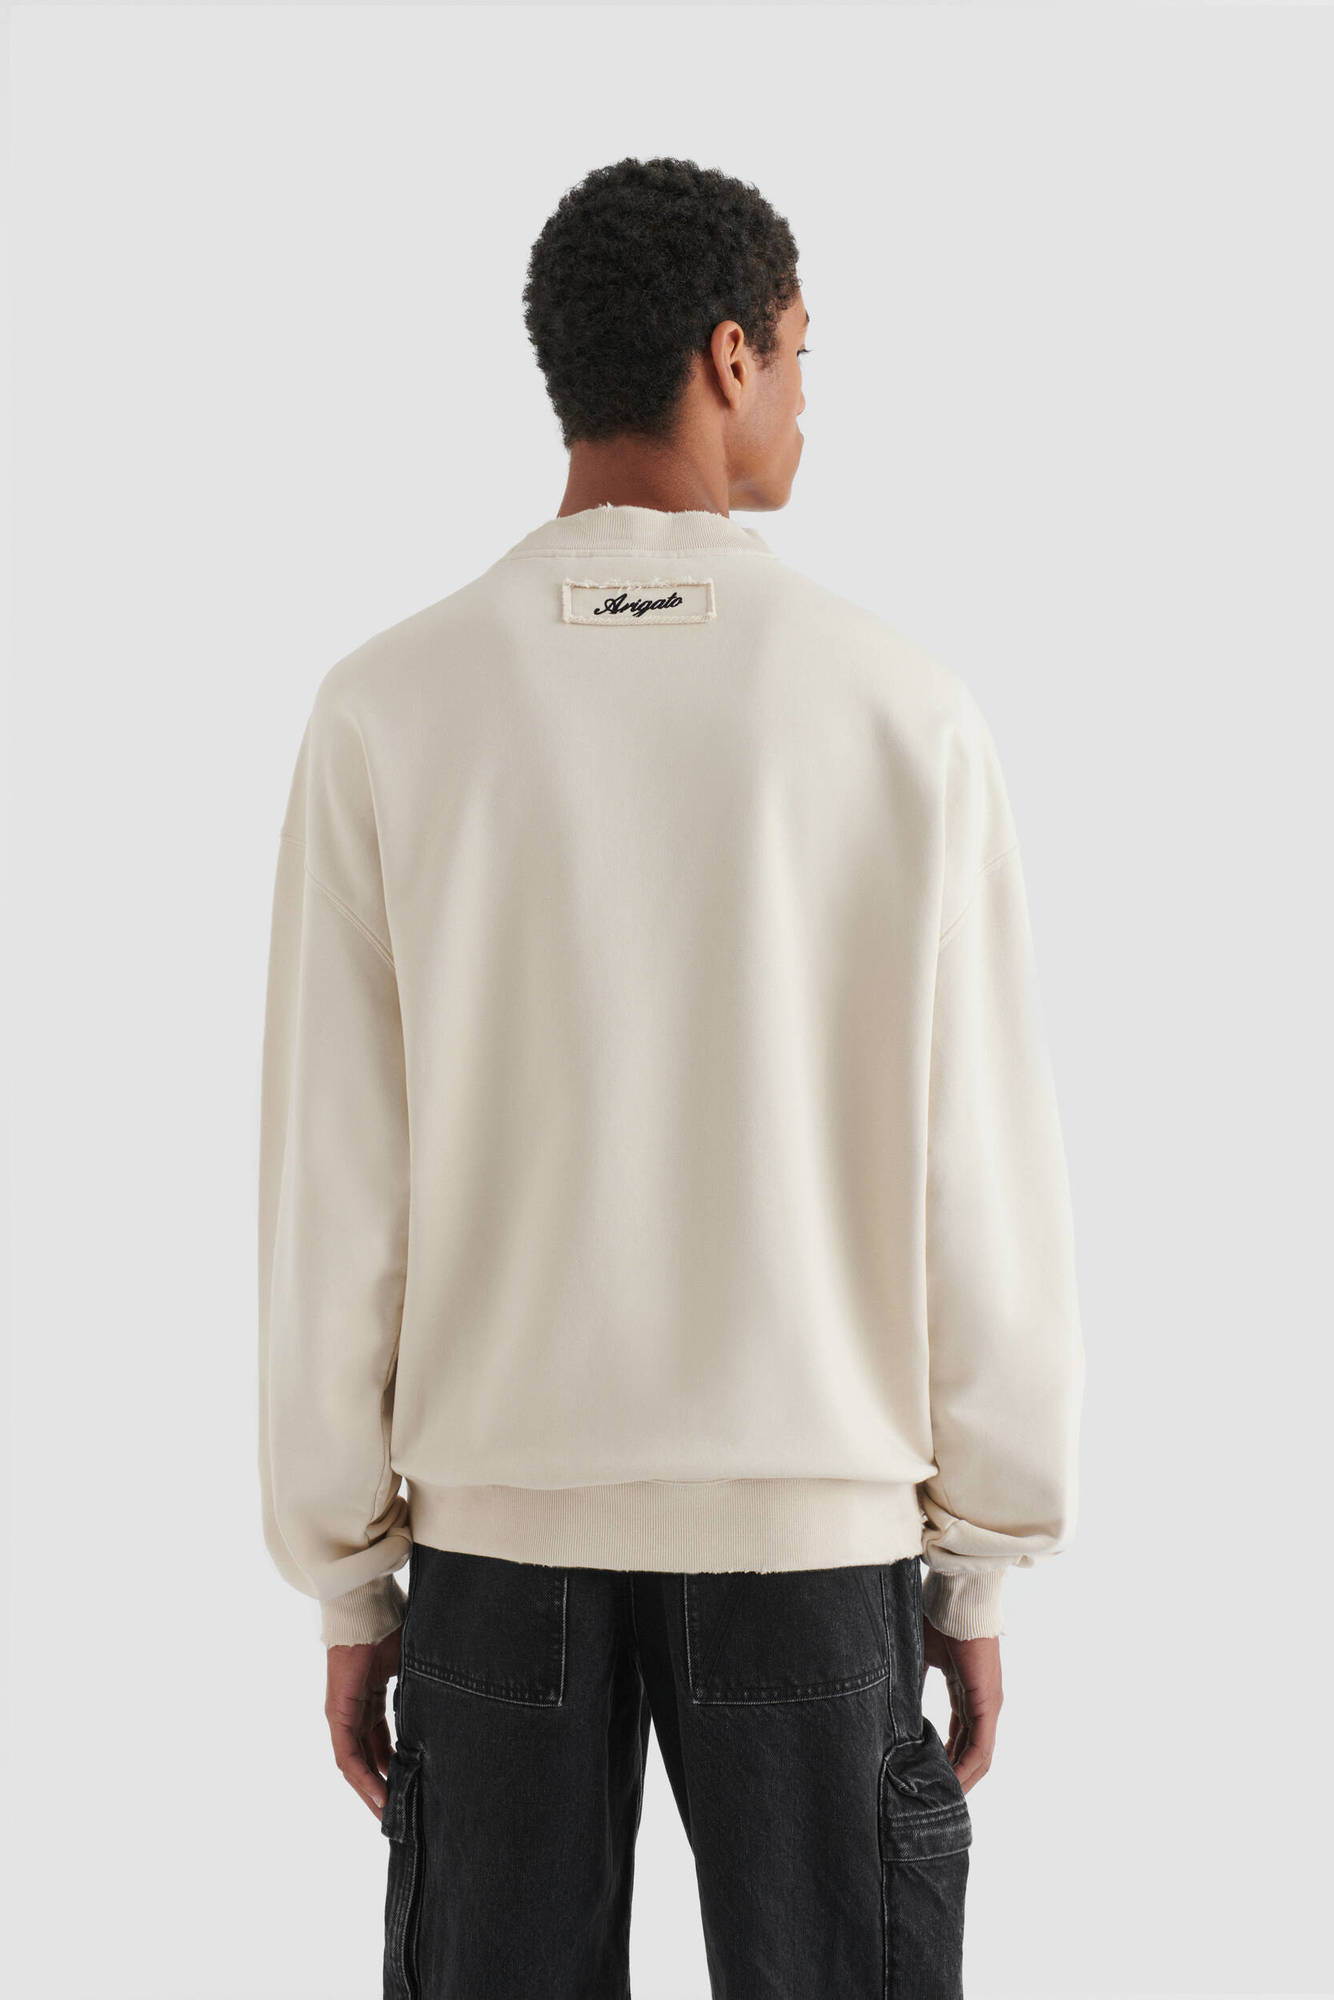 AXEL ARIGATO Vista Distressed Sweatshirt in Beige M